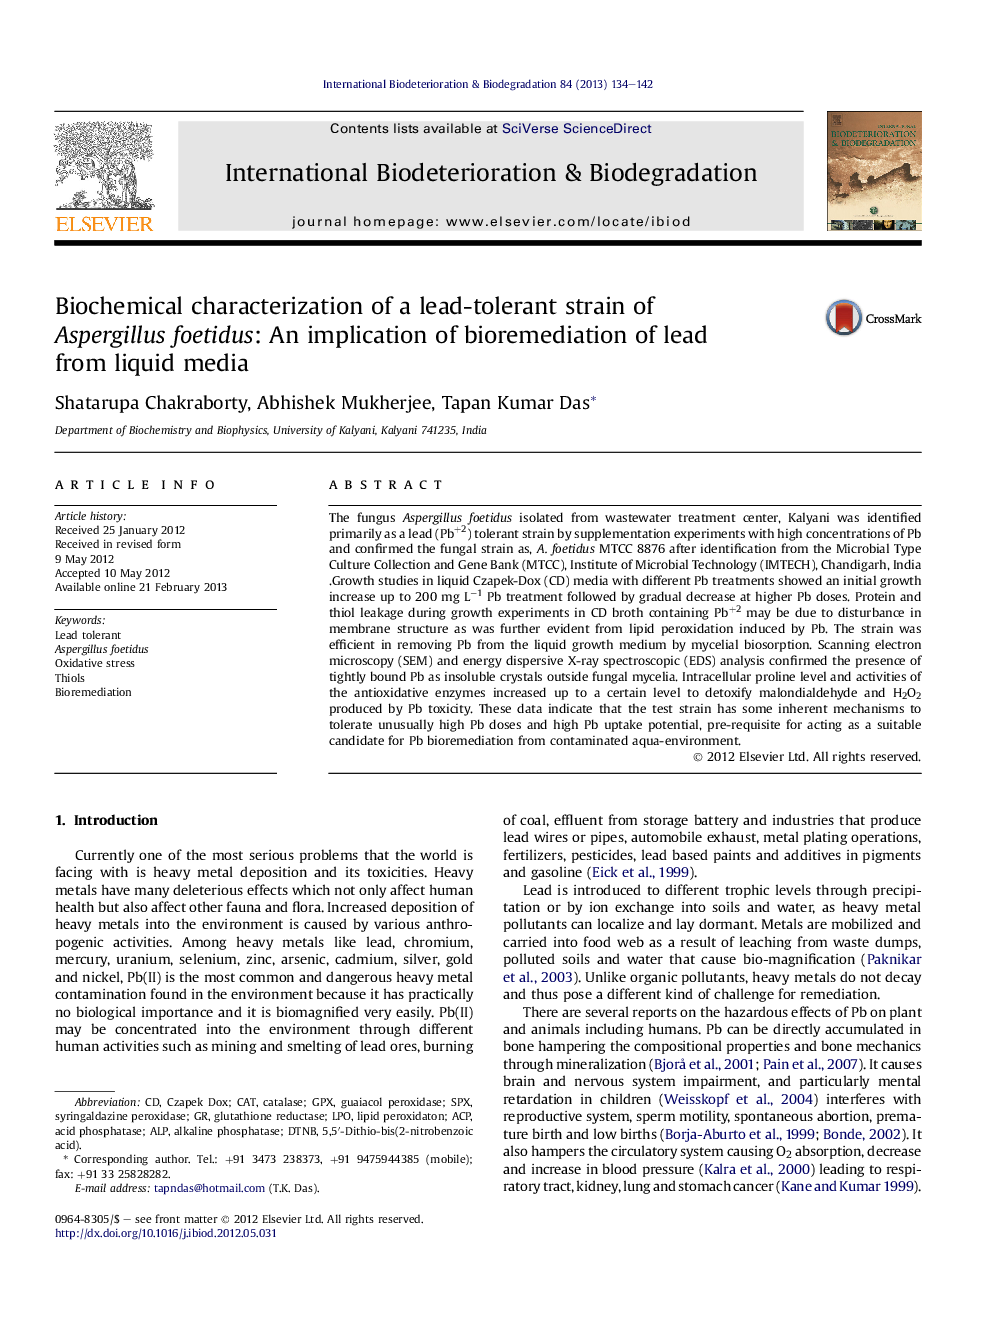 Biochemical characterization of a lead-tolerant strain of Aspergillus foetidus: AnÂ implication of bioremediation of lead from liquid media